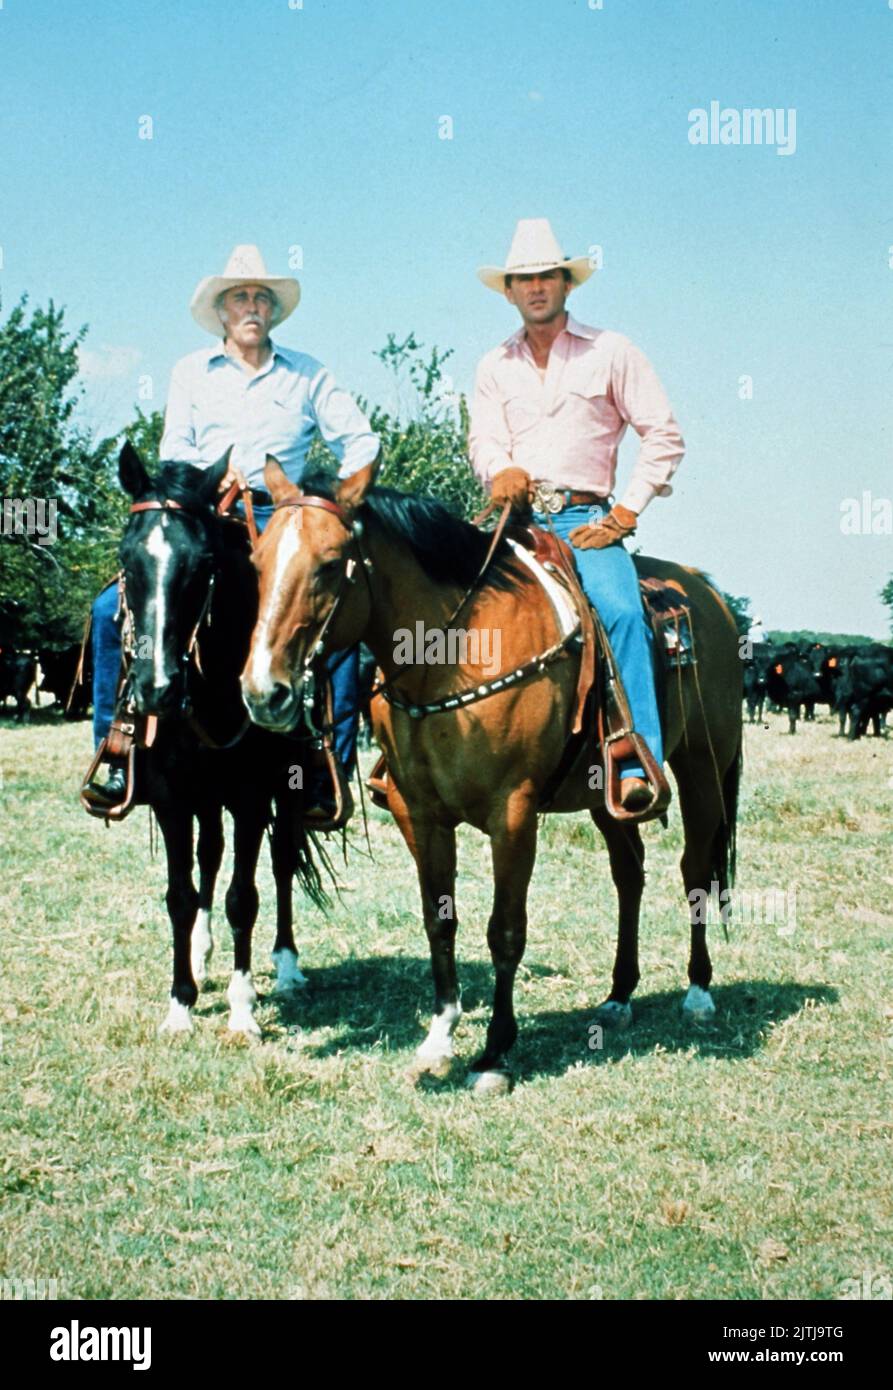 Dallas, Fernsehserie, USA 1978 - 1991, Darsteller: Howard Keel, Patrick Duffy Foto Stock